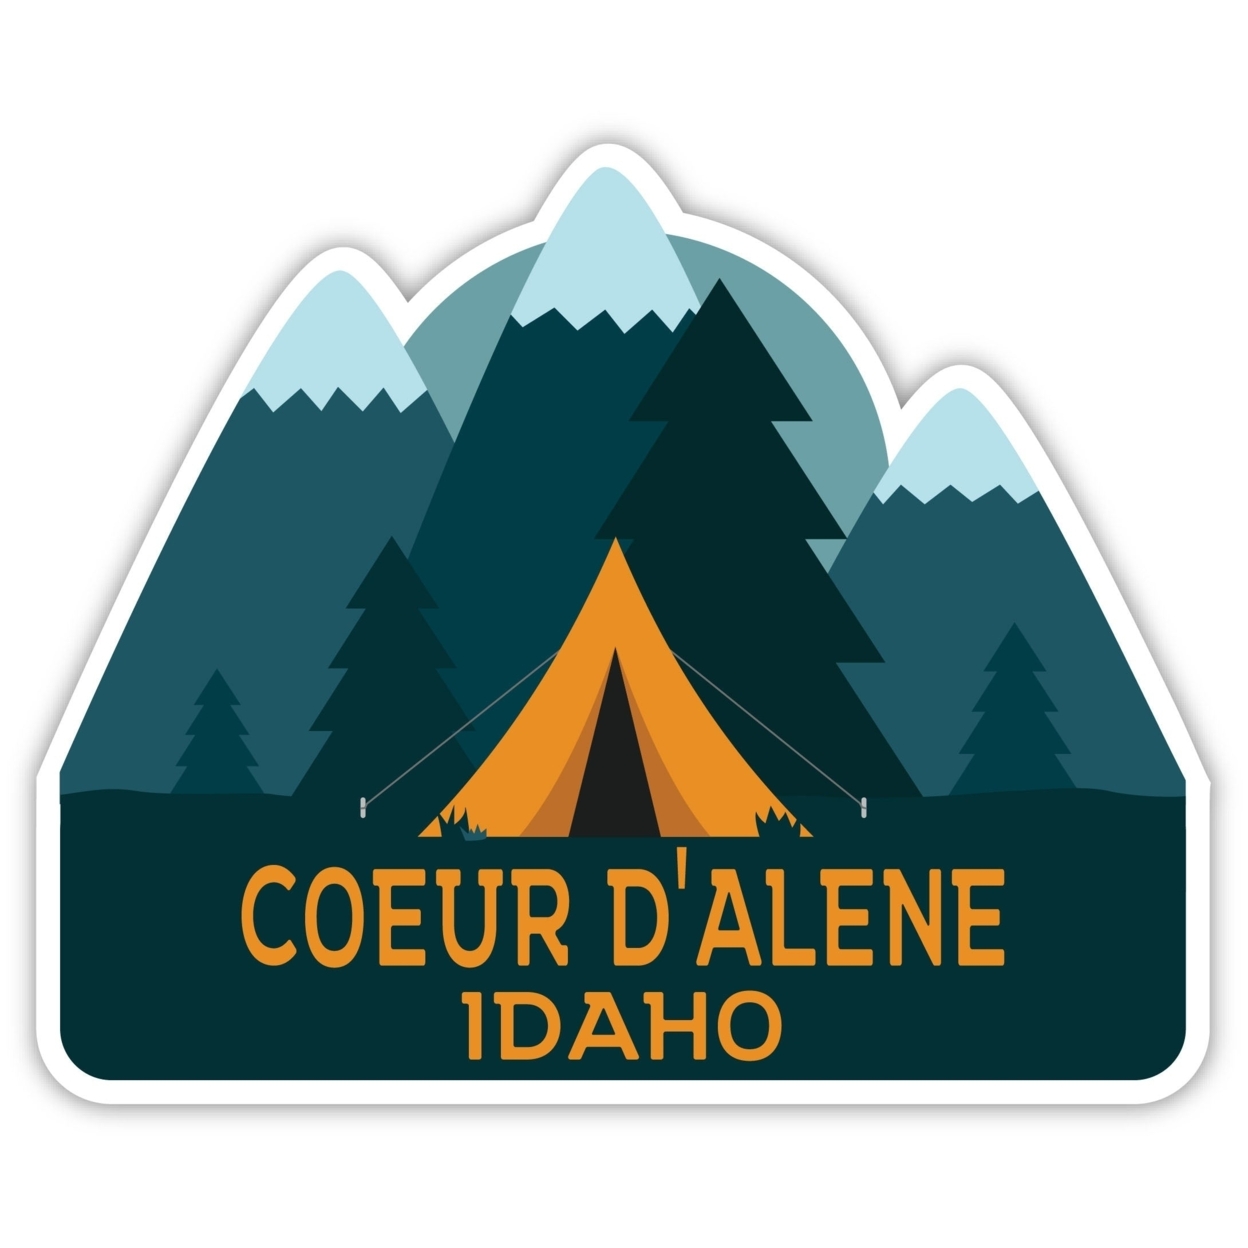 Coeur D'Alene Idaho Souvenir Decorative Stickers (Choose Theme And Size) - 4-Pack, 10-Inch, Adventures Awaits